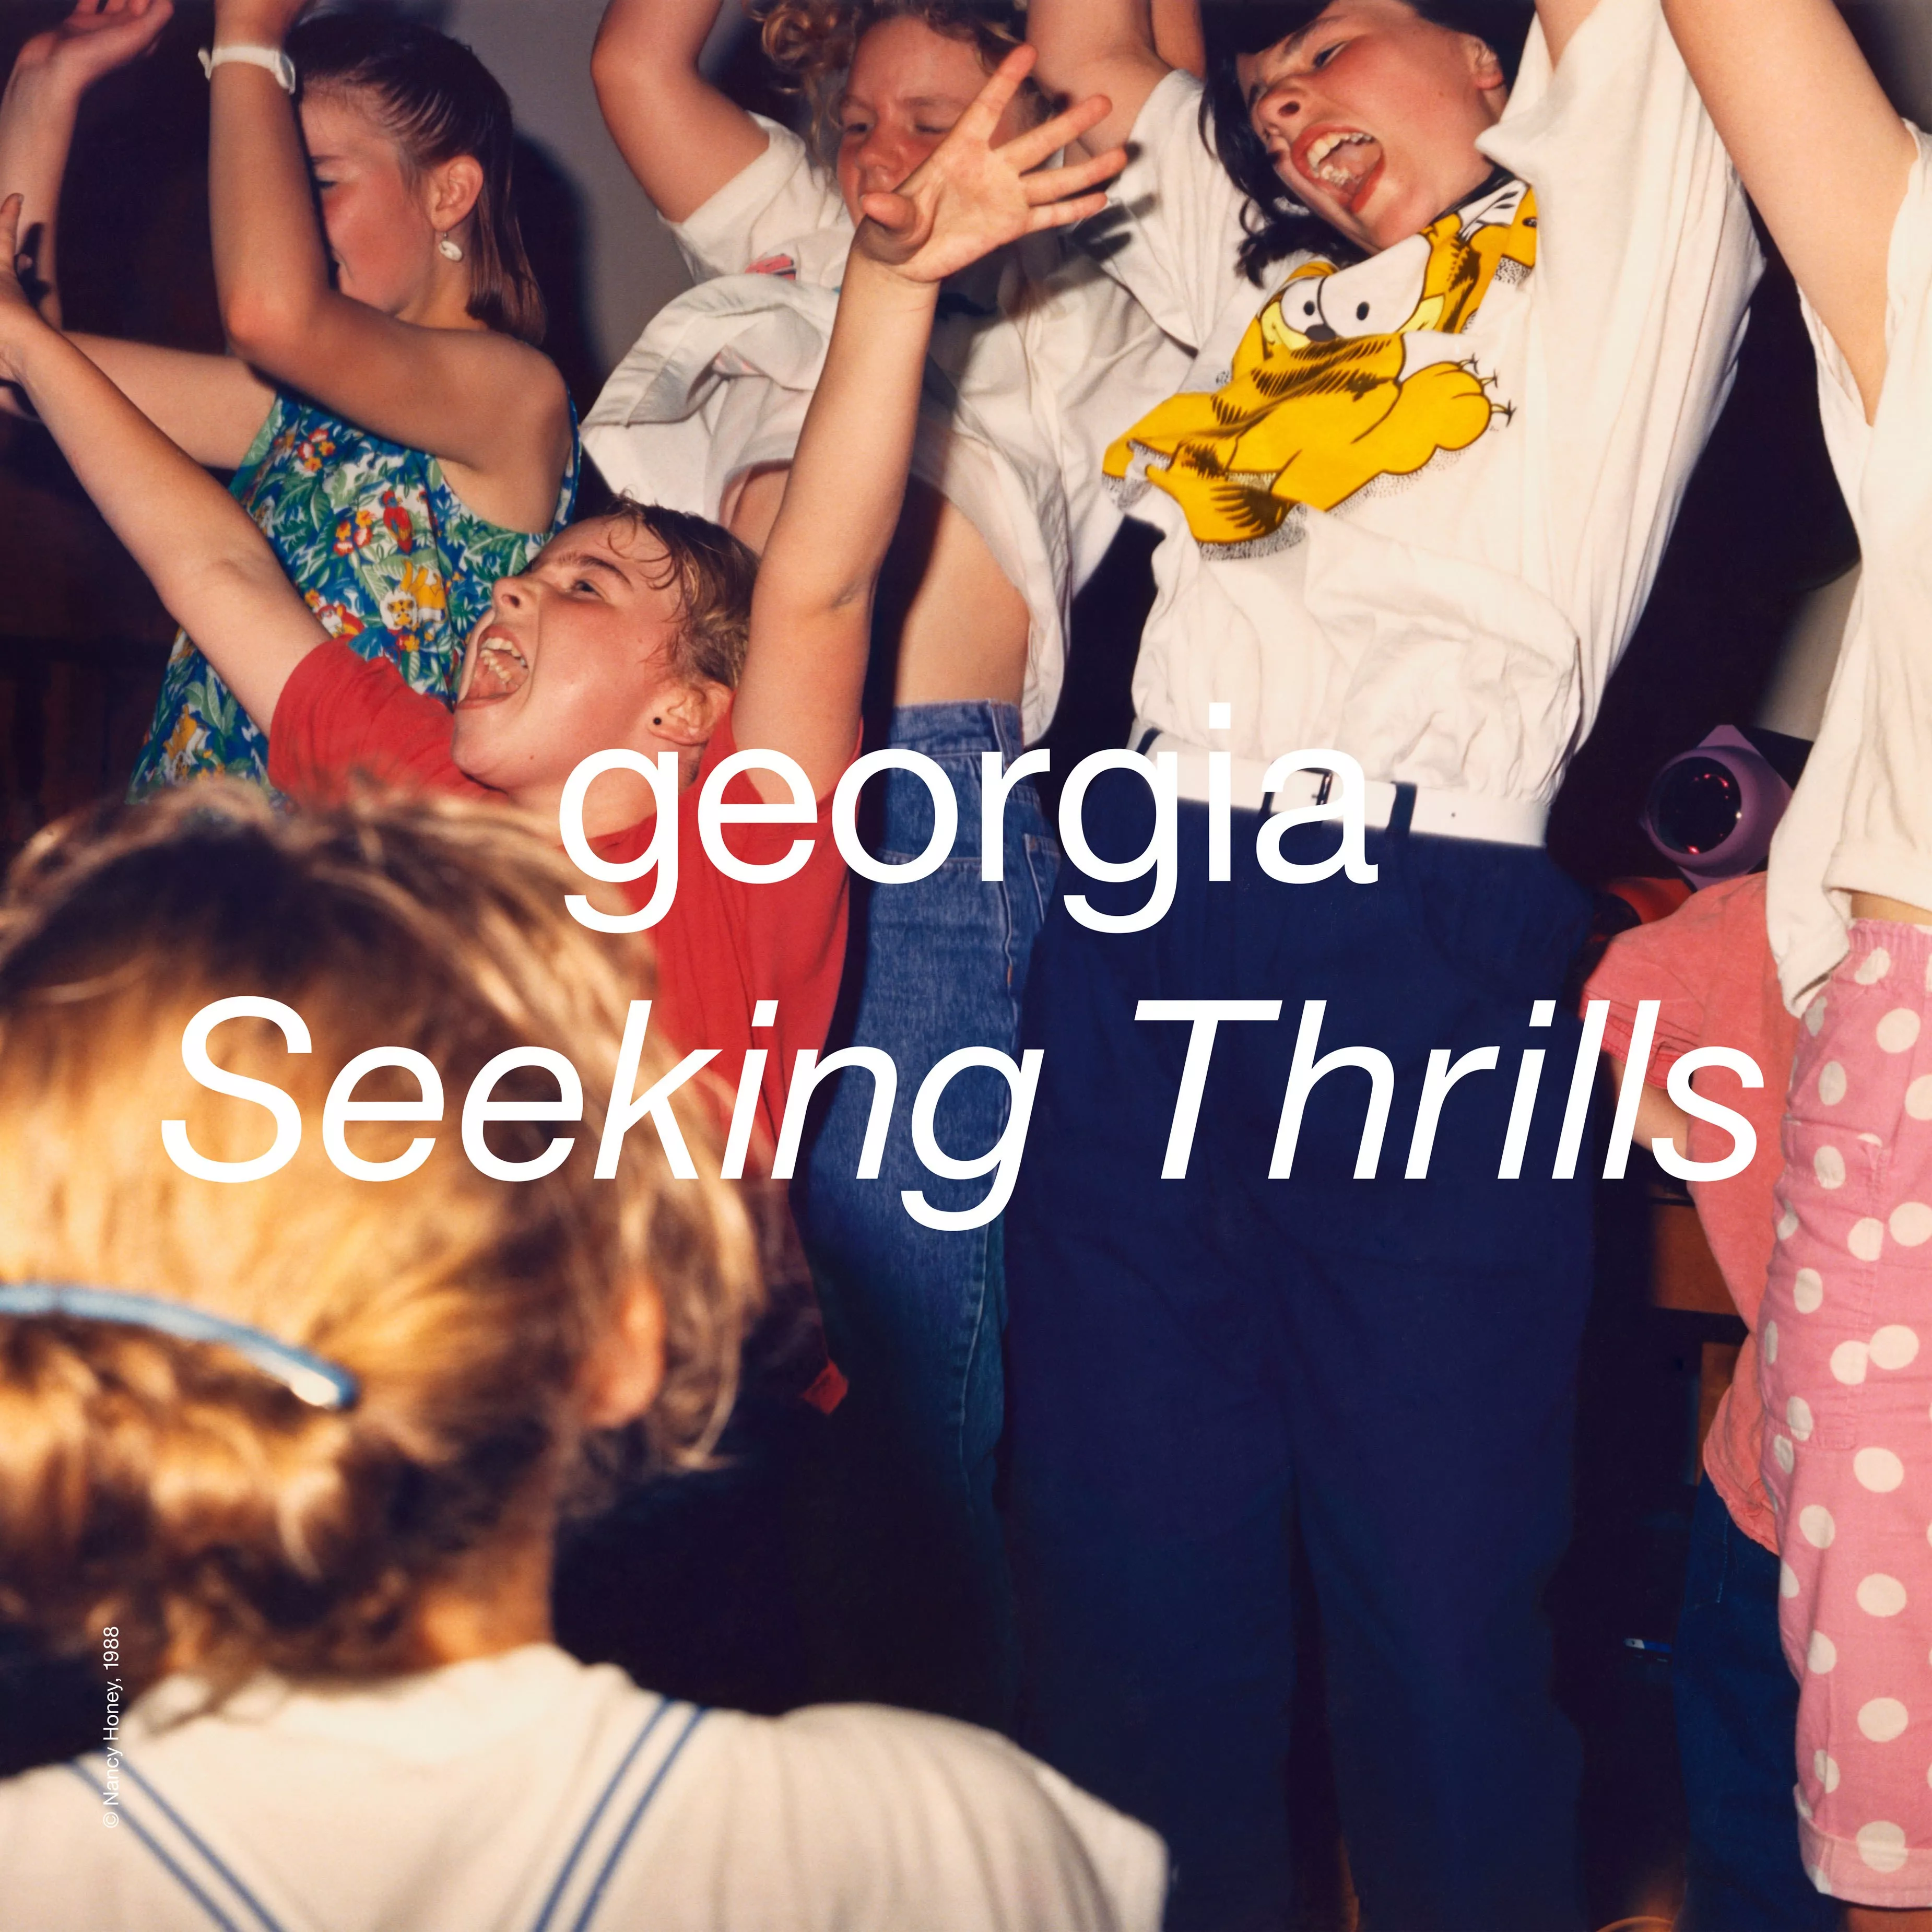 Seeking Thrills - Georgia